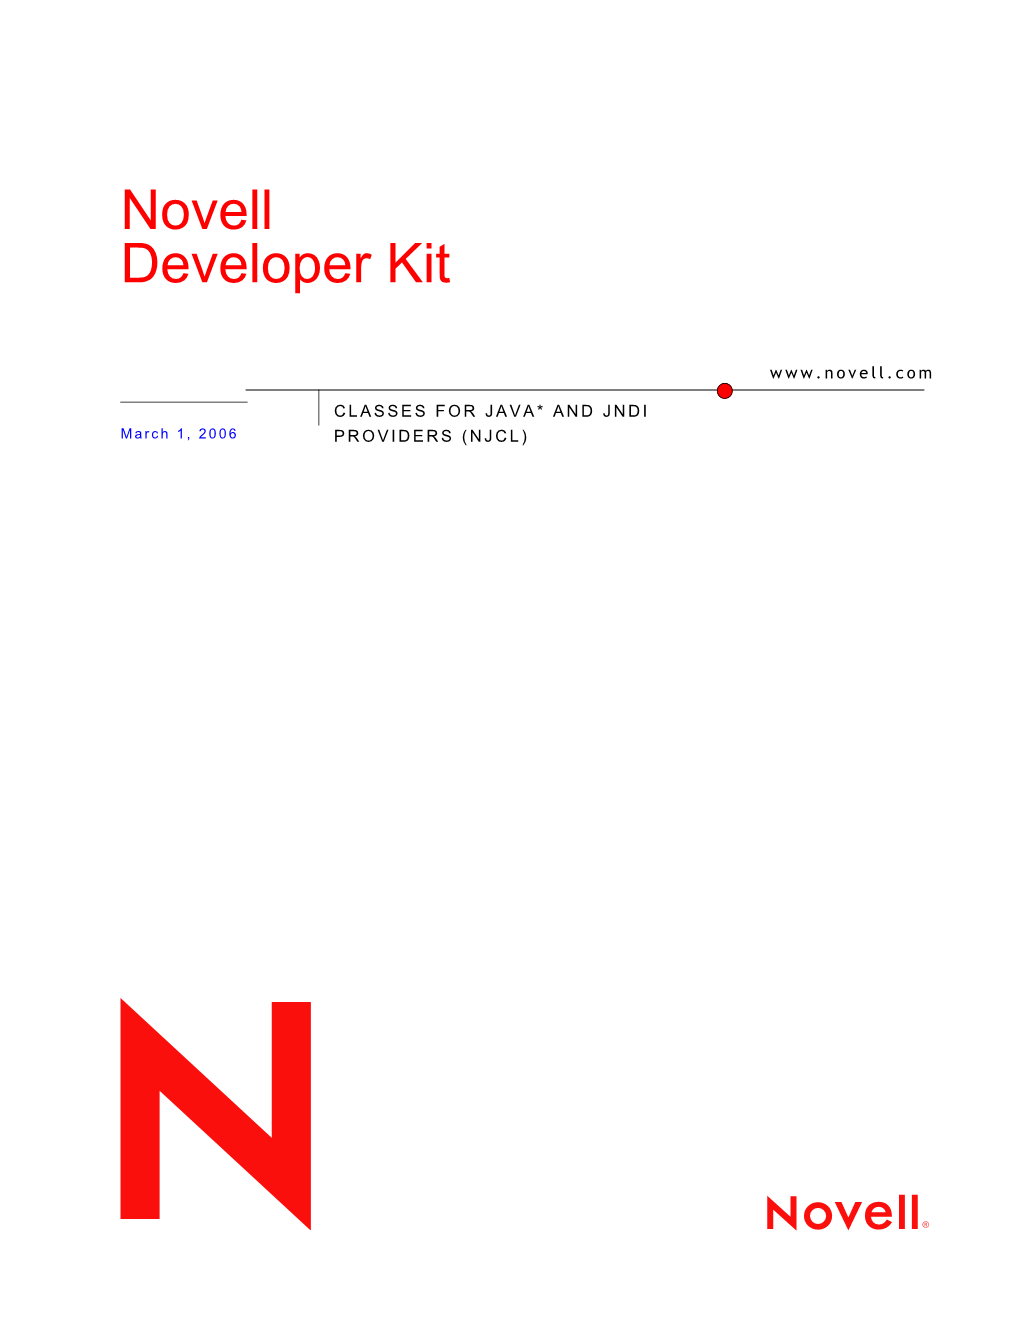 Classes for Java and JNDI Providers (NJCL) Novdocx (ENU) 01 February 2006